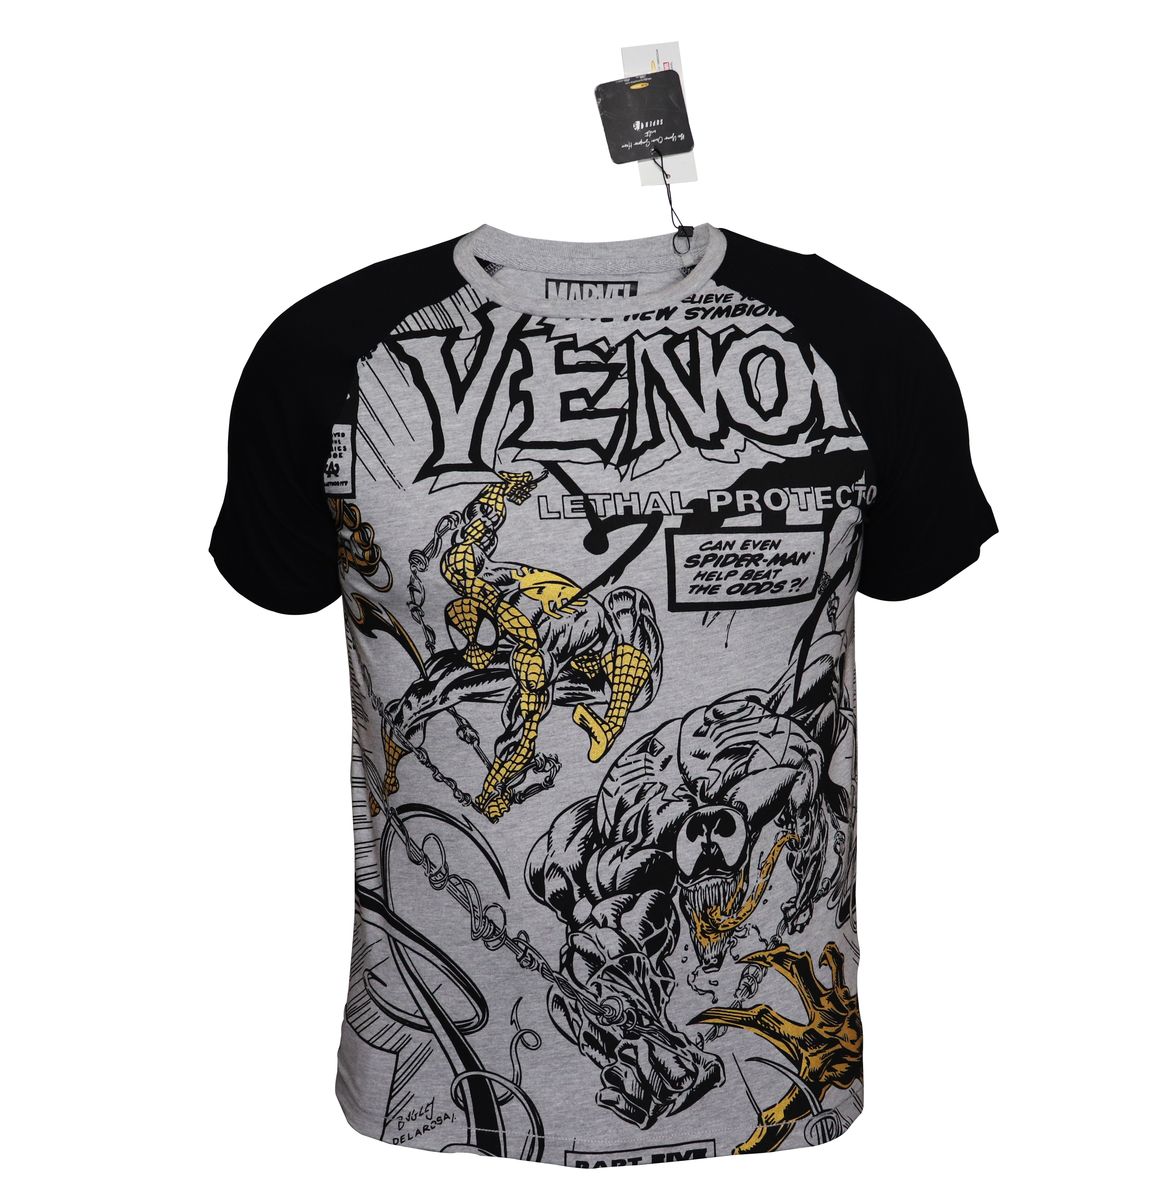 arvel Veno Crew Neck Short Sleeve with etallic Print Dark Grey elange